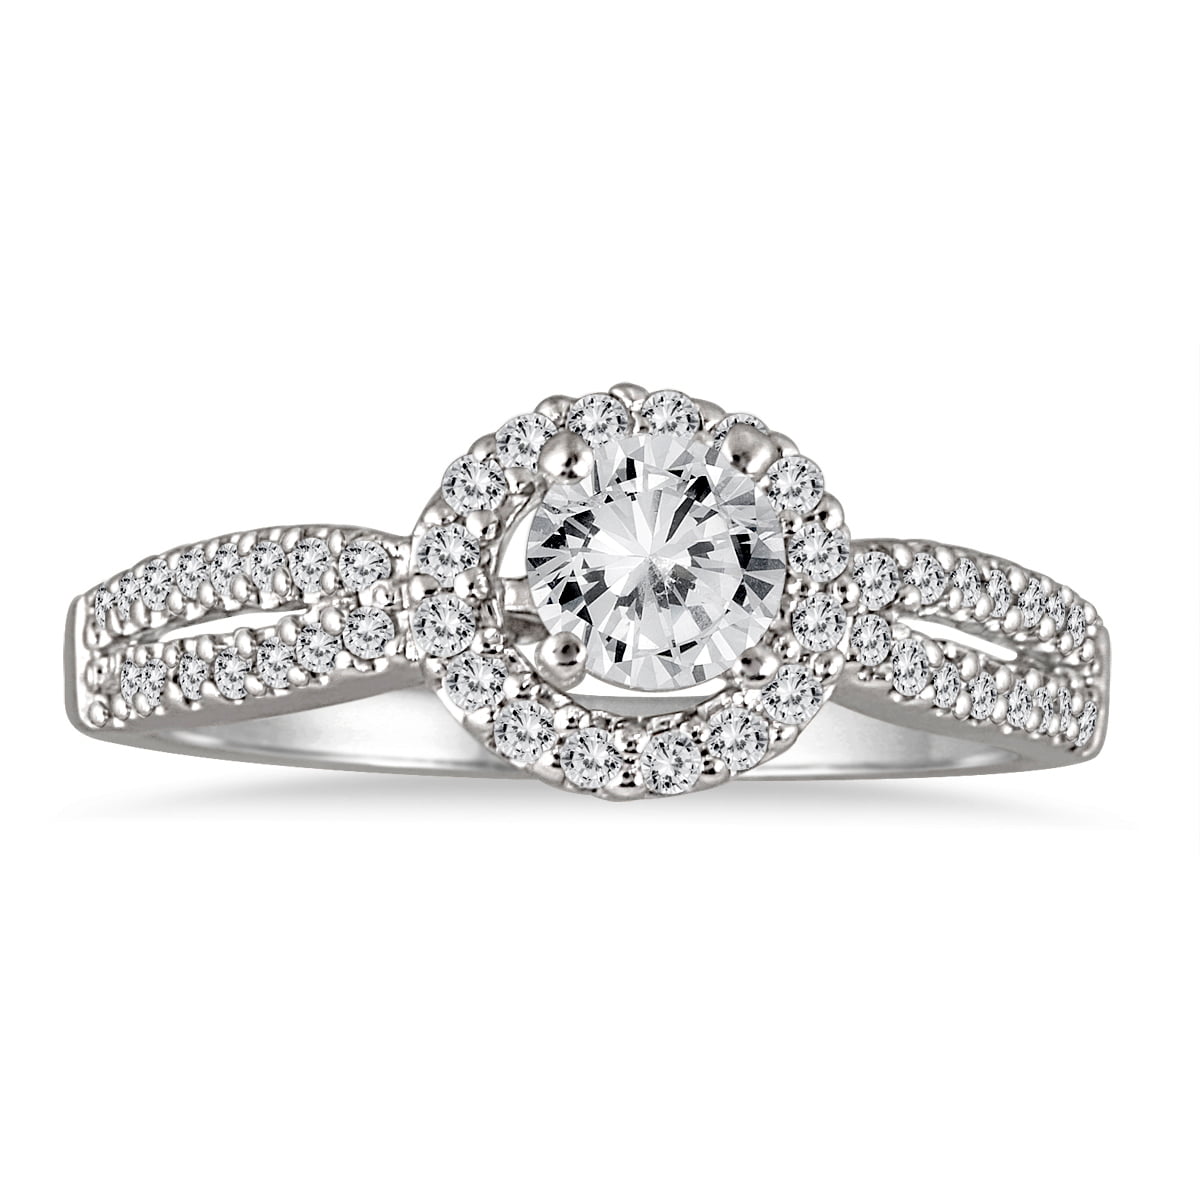 SZUL Women's 1 1/10 Carat TW White Diamond Engagement Ring in 14K White ...